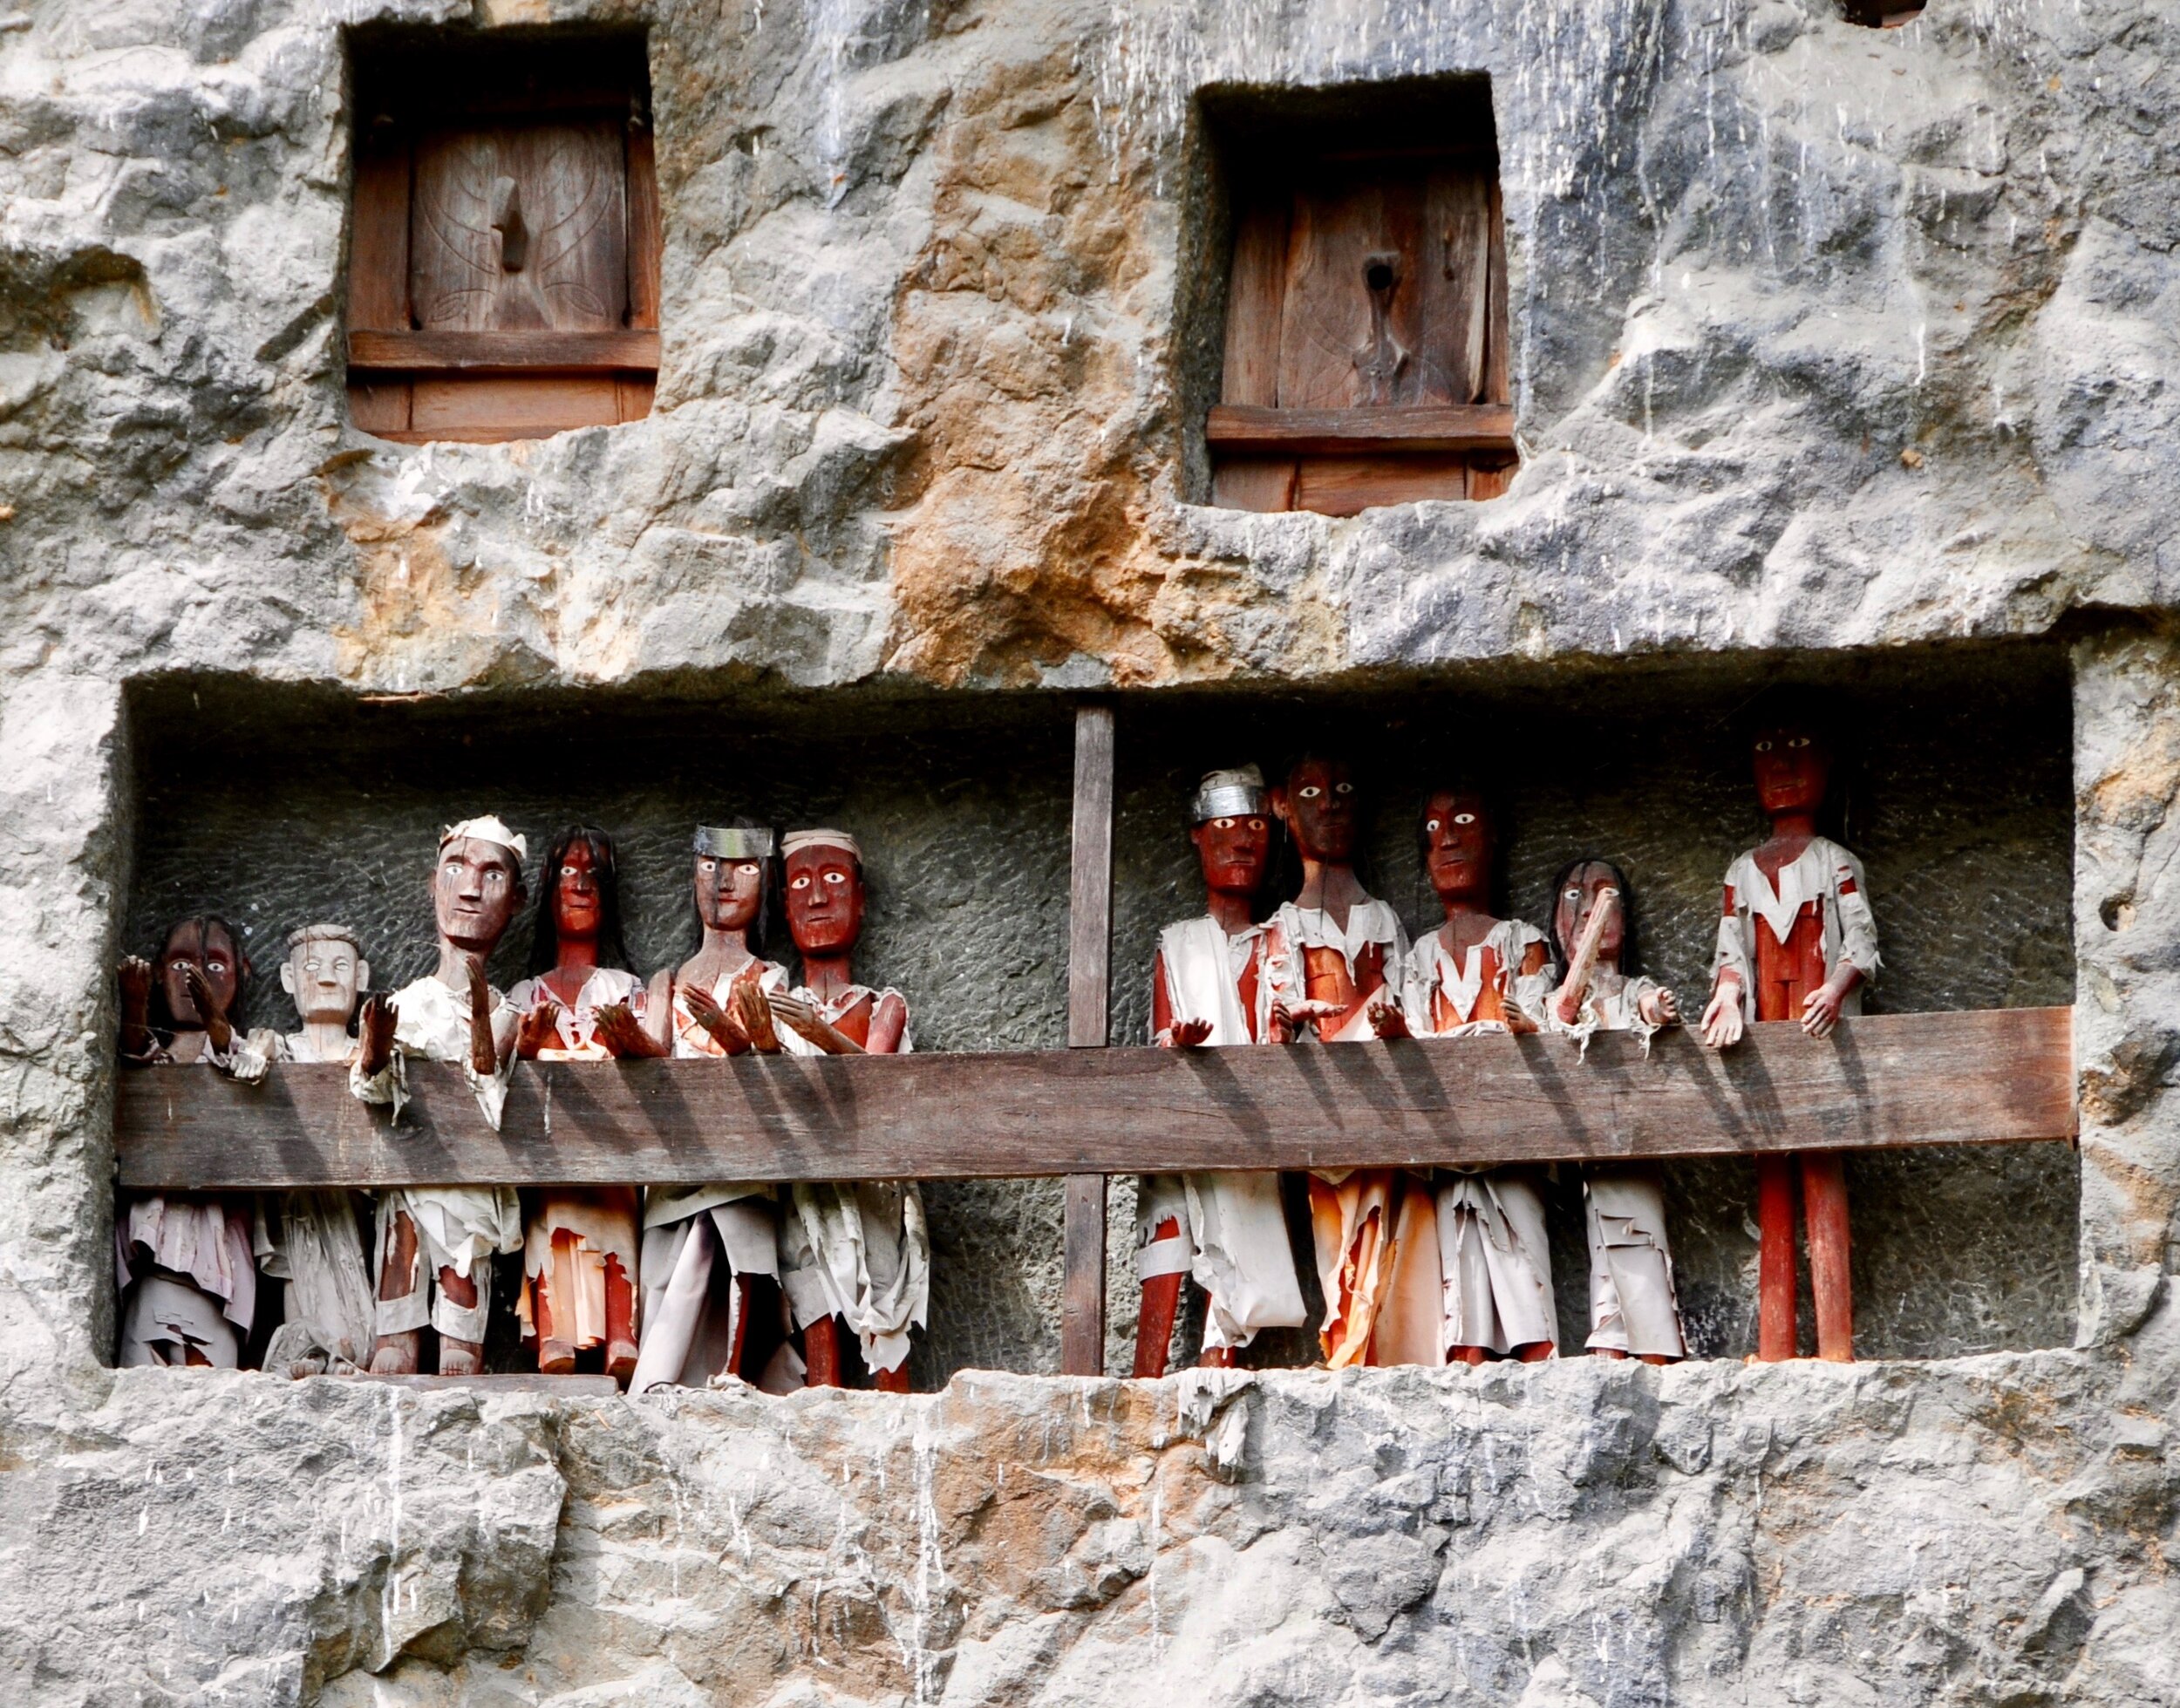 2010 02 09 037 Indonesia Sulawesi Toraja Tour Lemo village hanging graves balcony effigies.jpeg